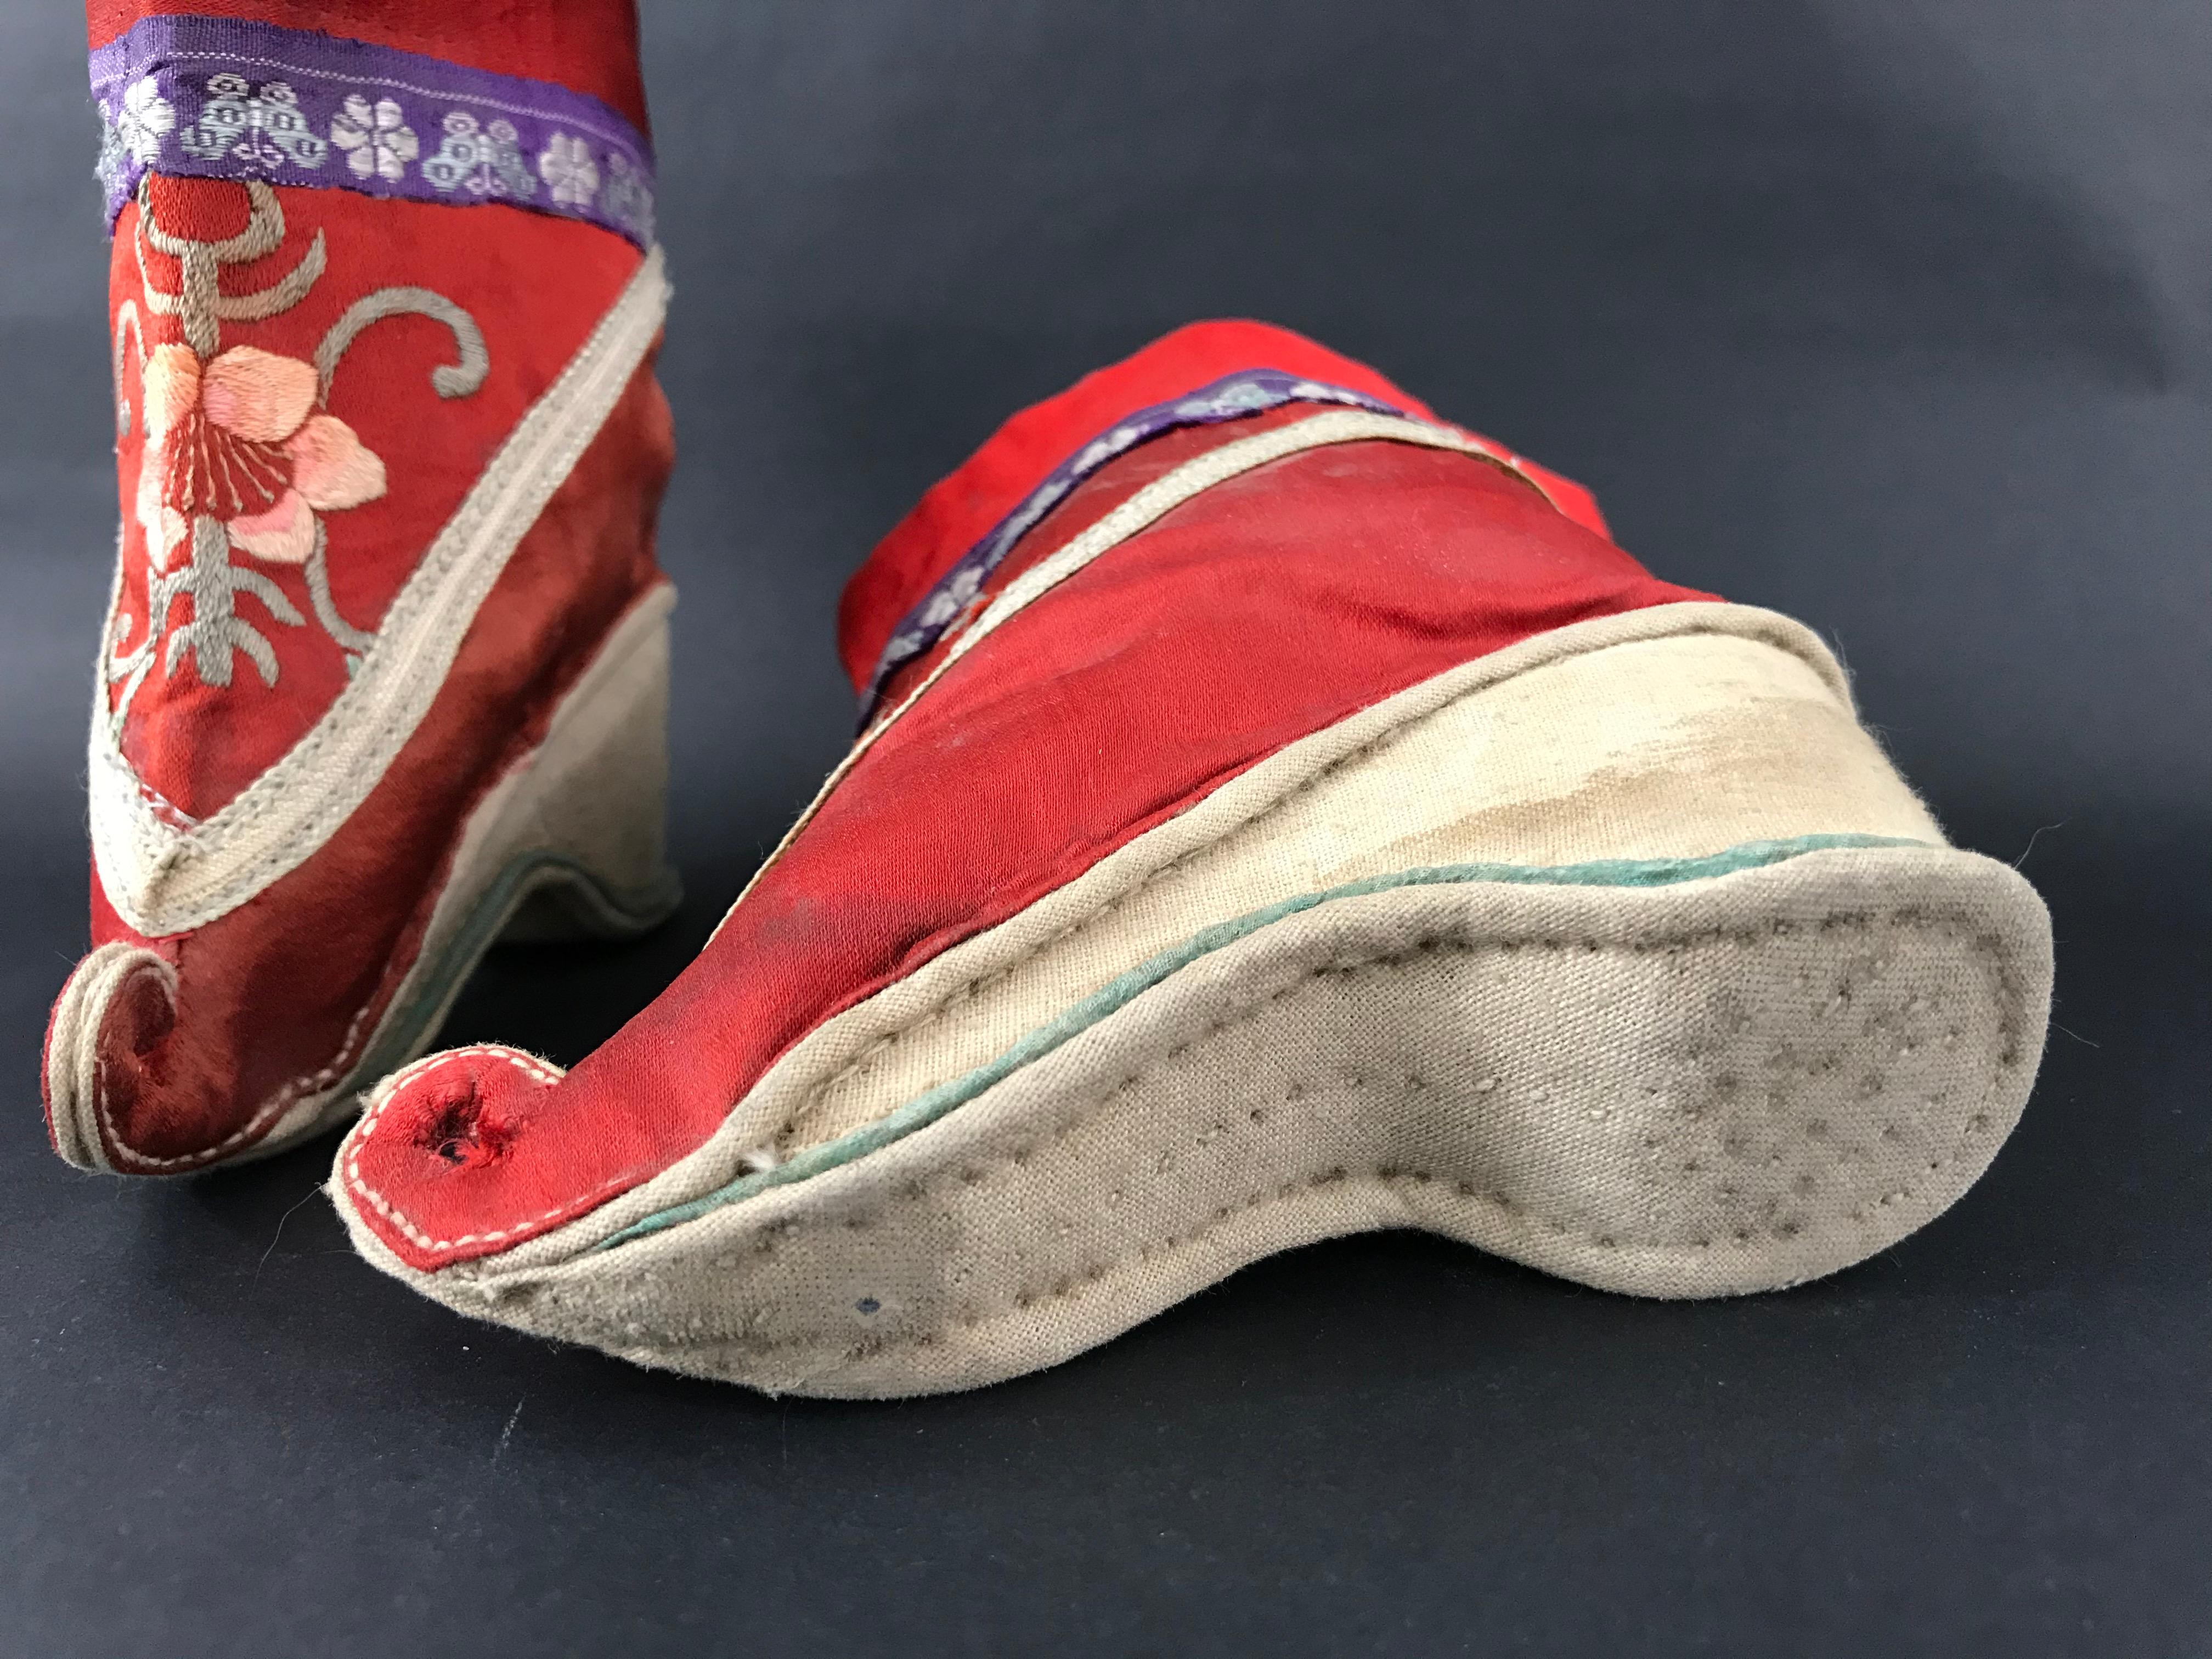 Satin Woman's Footwear with Bandaged Feet, China, circa 1900